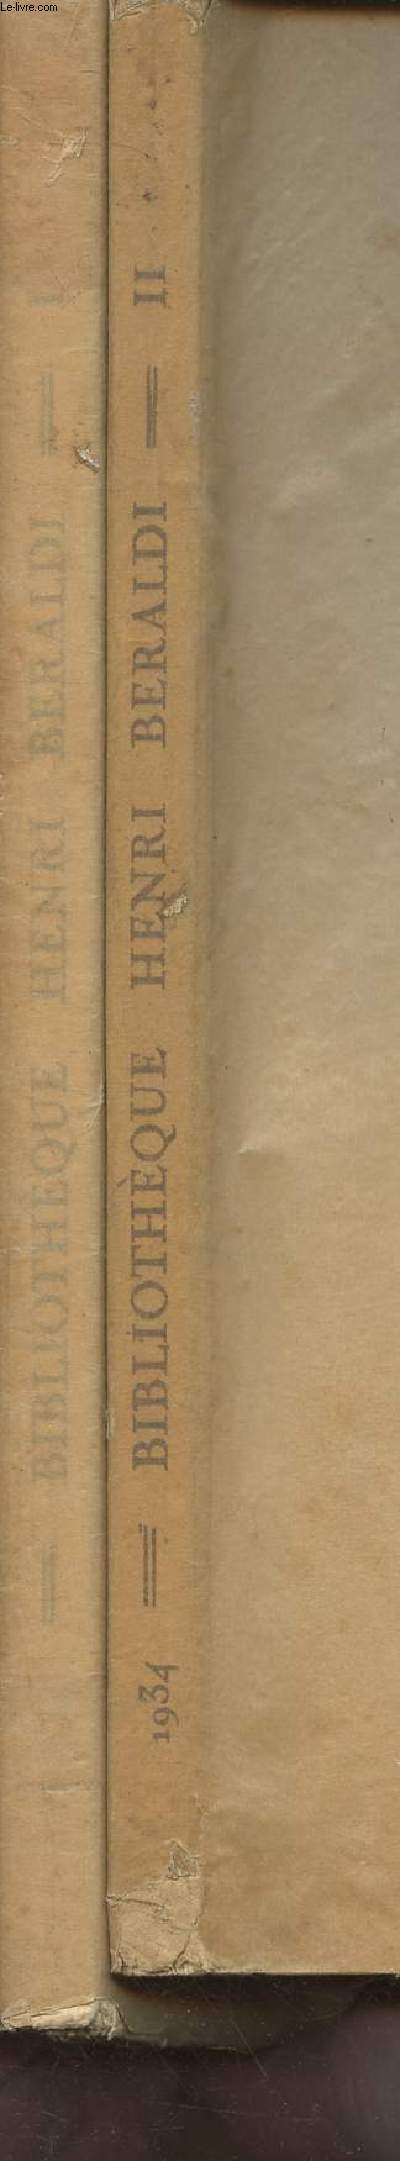 Bibliothèque Henri Beraldi-Parties I et II (2 volumes) Livres anciens, époque romantique, livres illustrés modernes etc